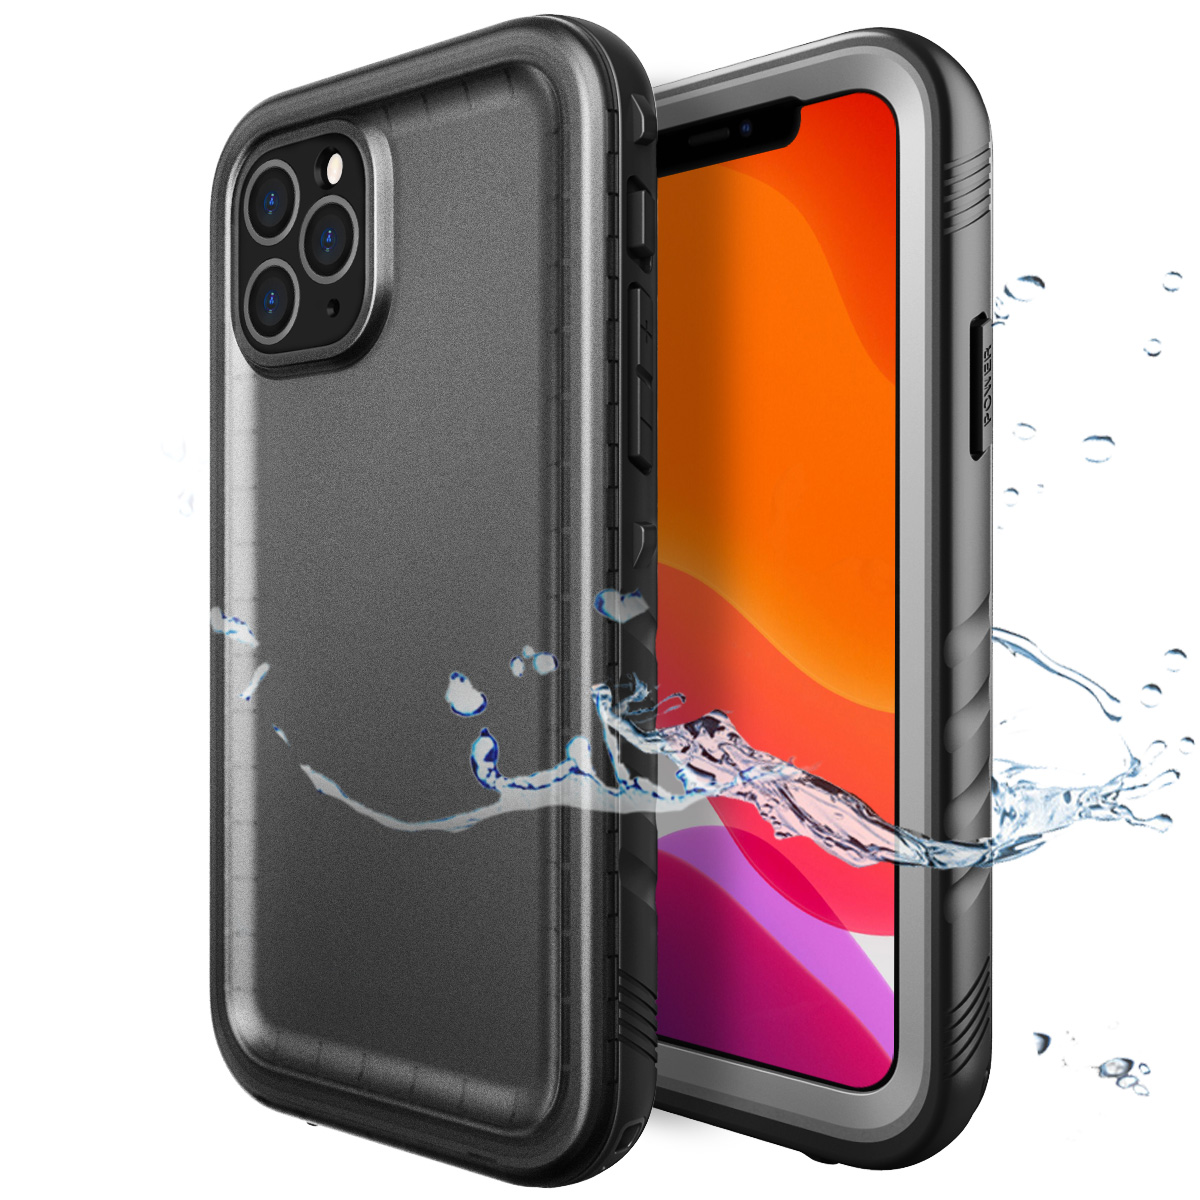 waterproof iPhone 11 pro case